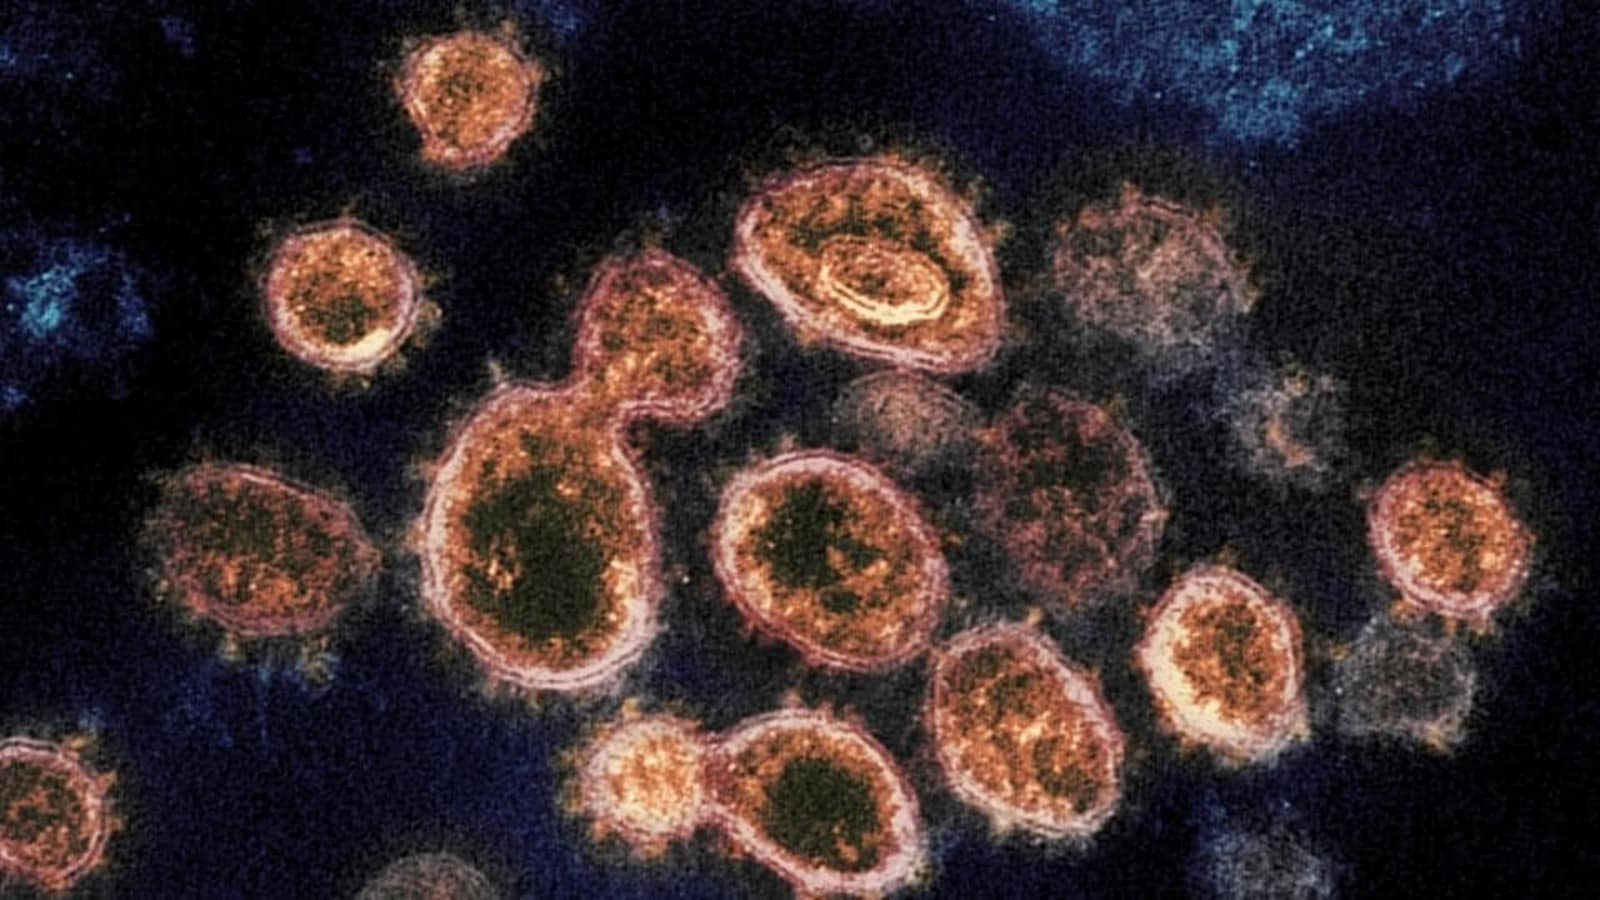 Bacterial pneumonia caused Covid deaths, not ‘cytokine storm’: Study